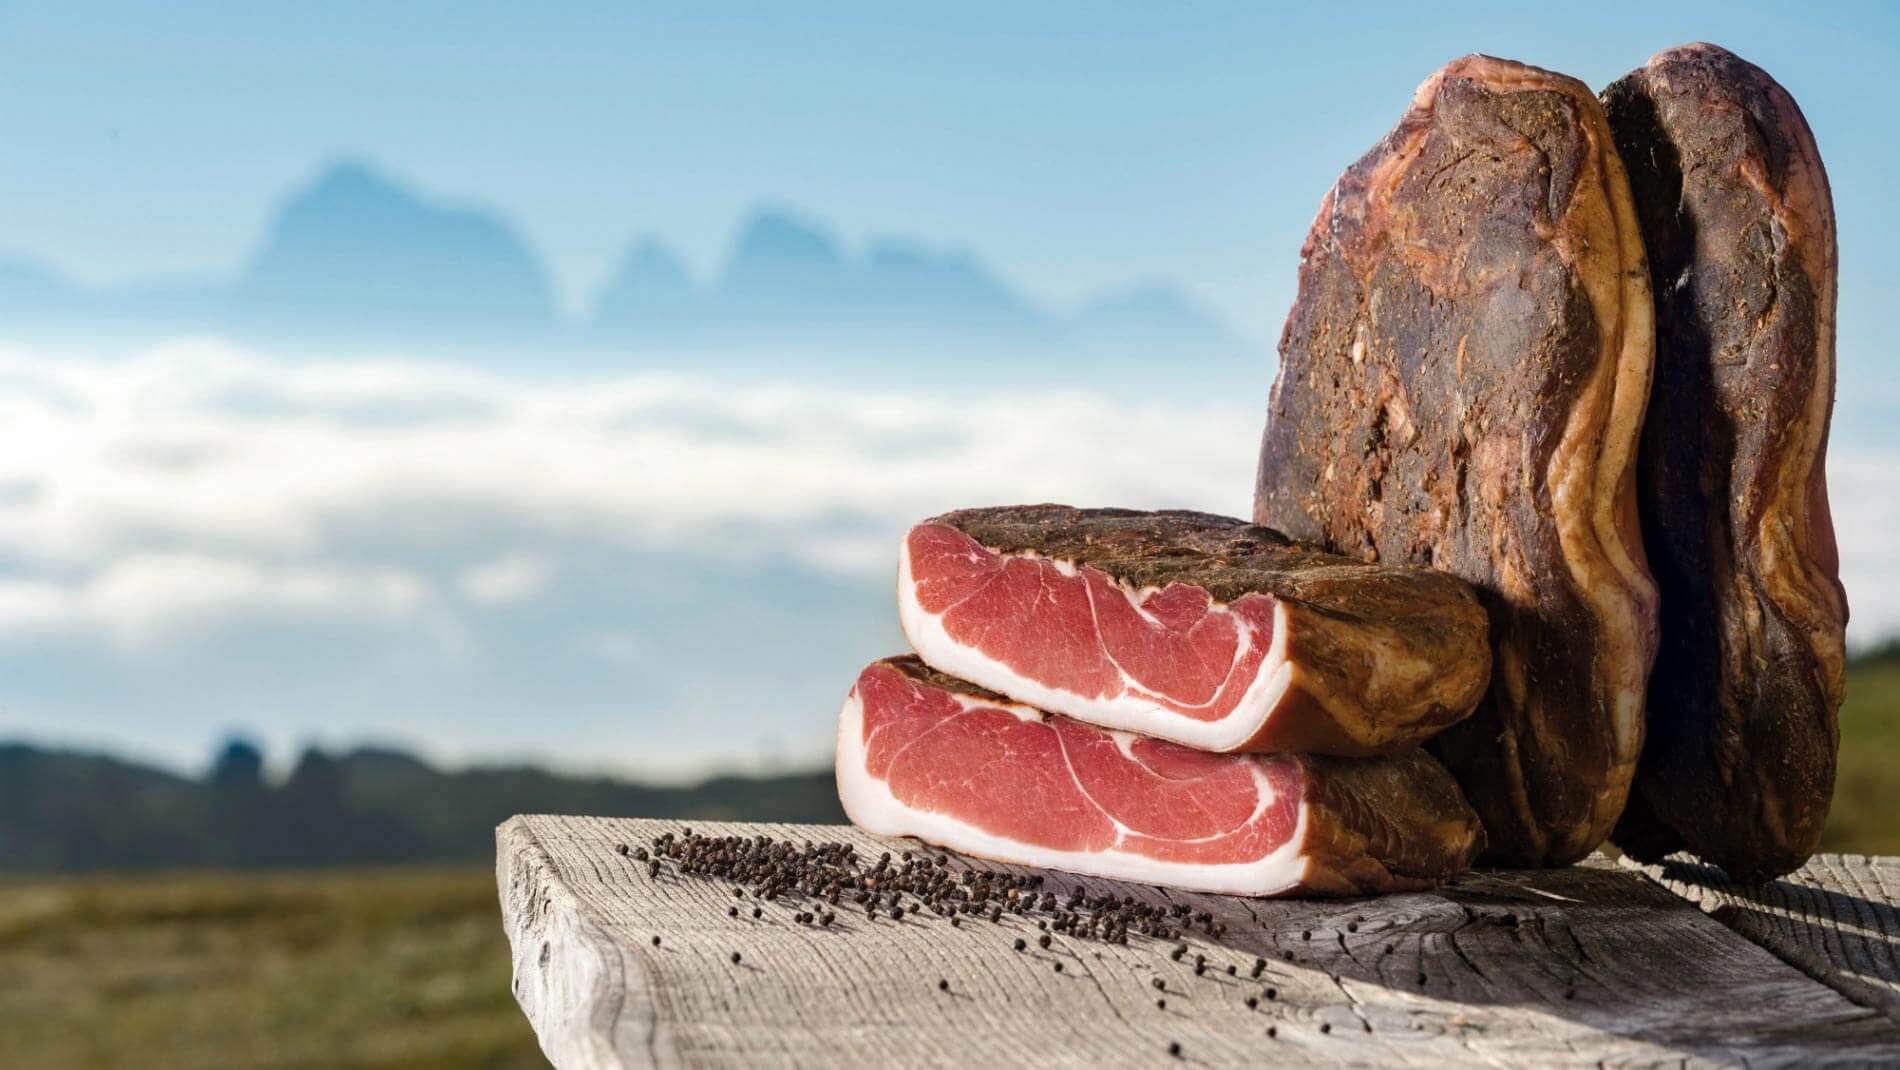 Speck Alto Adige PGI South Original Bacon Speck / – Tyrolean